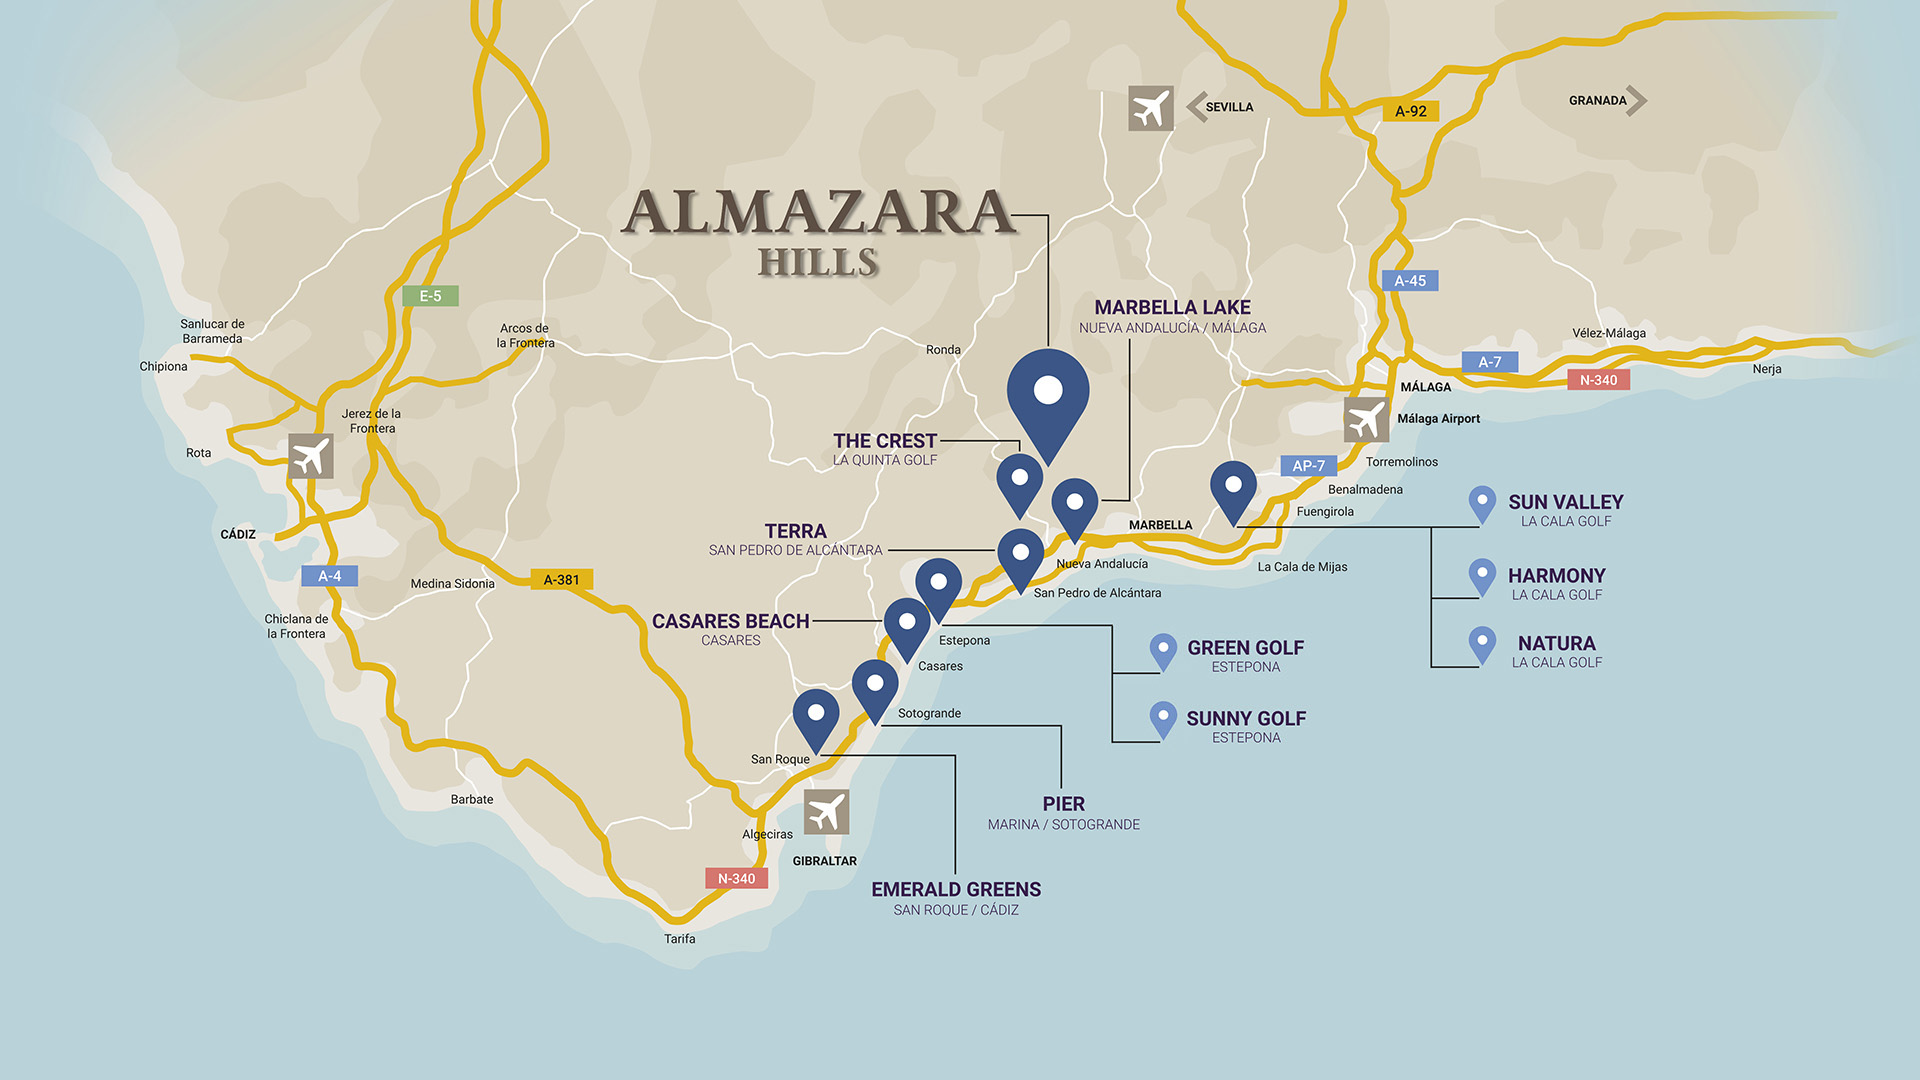 Mapa ALMAZARA ages